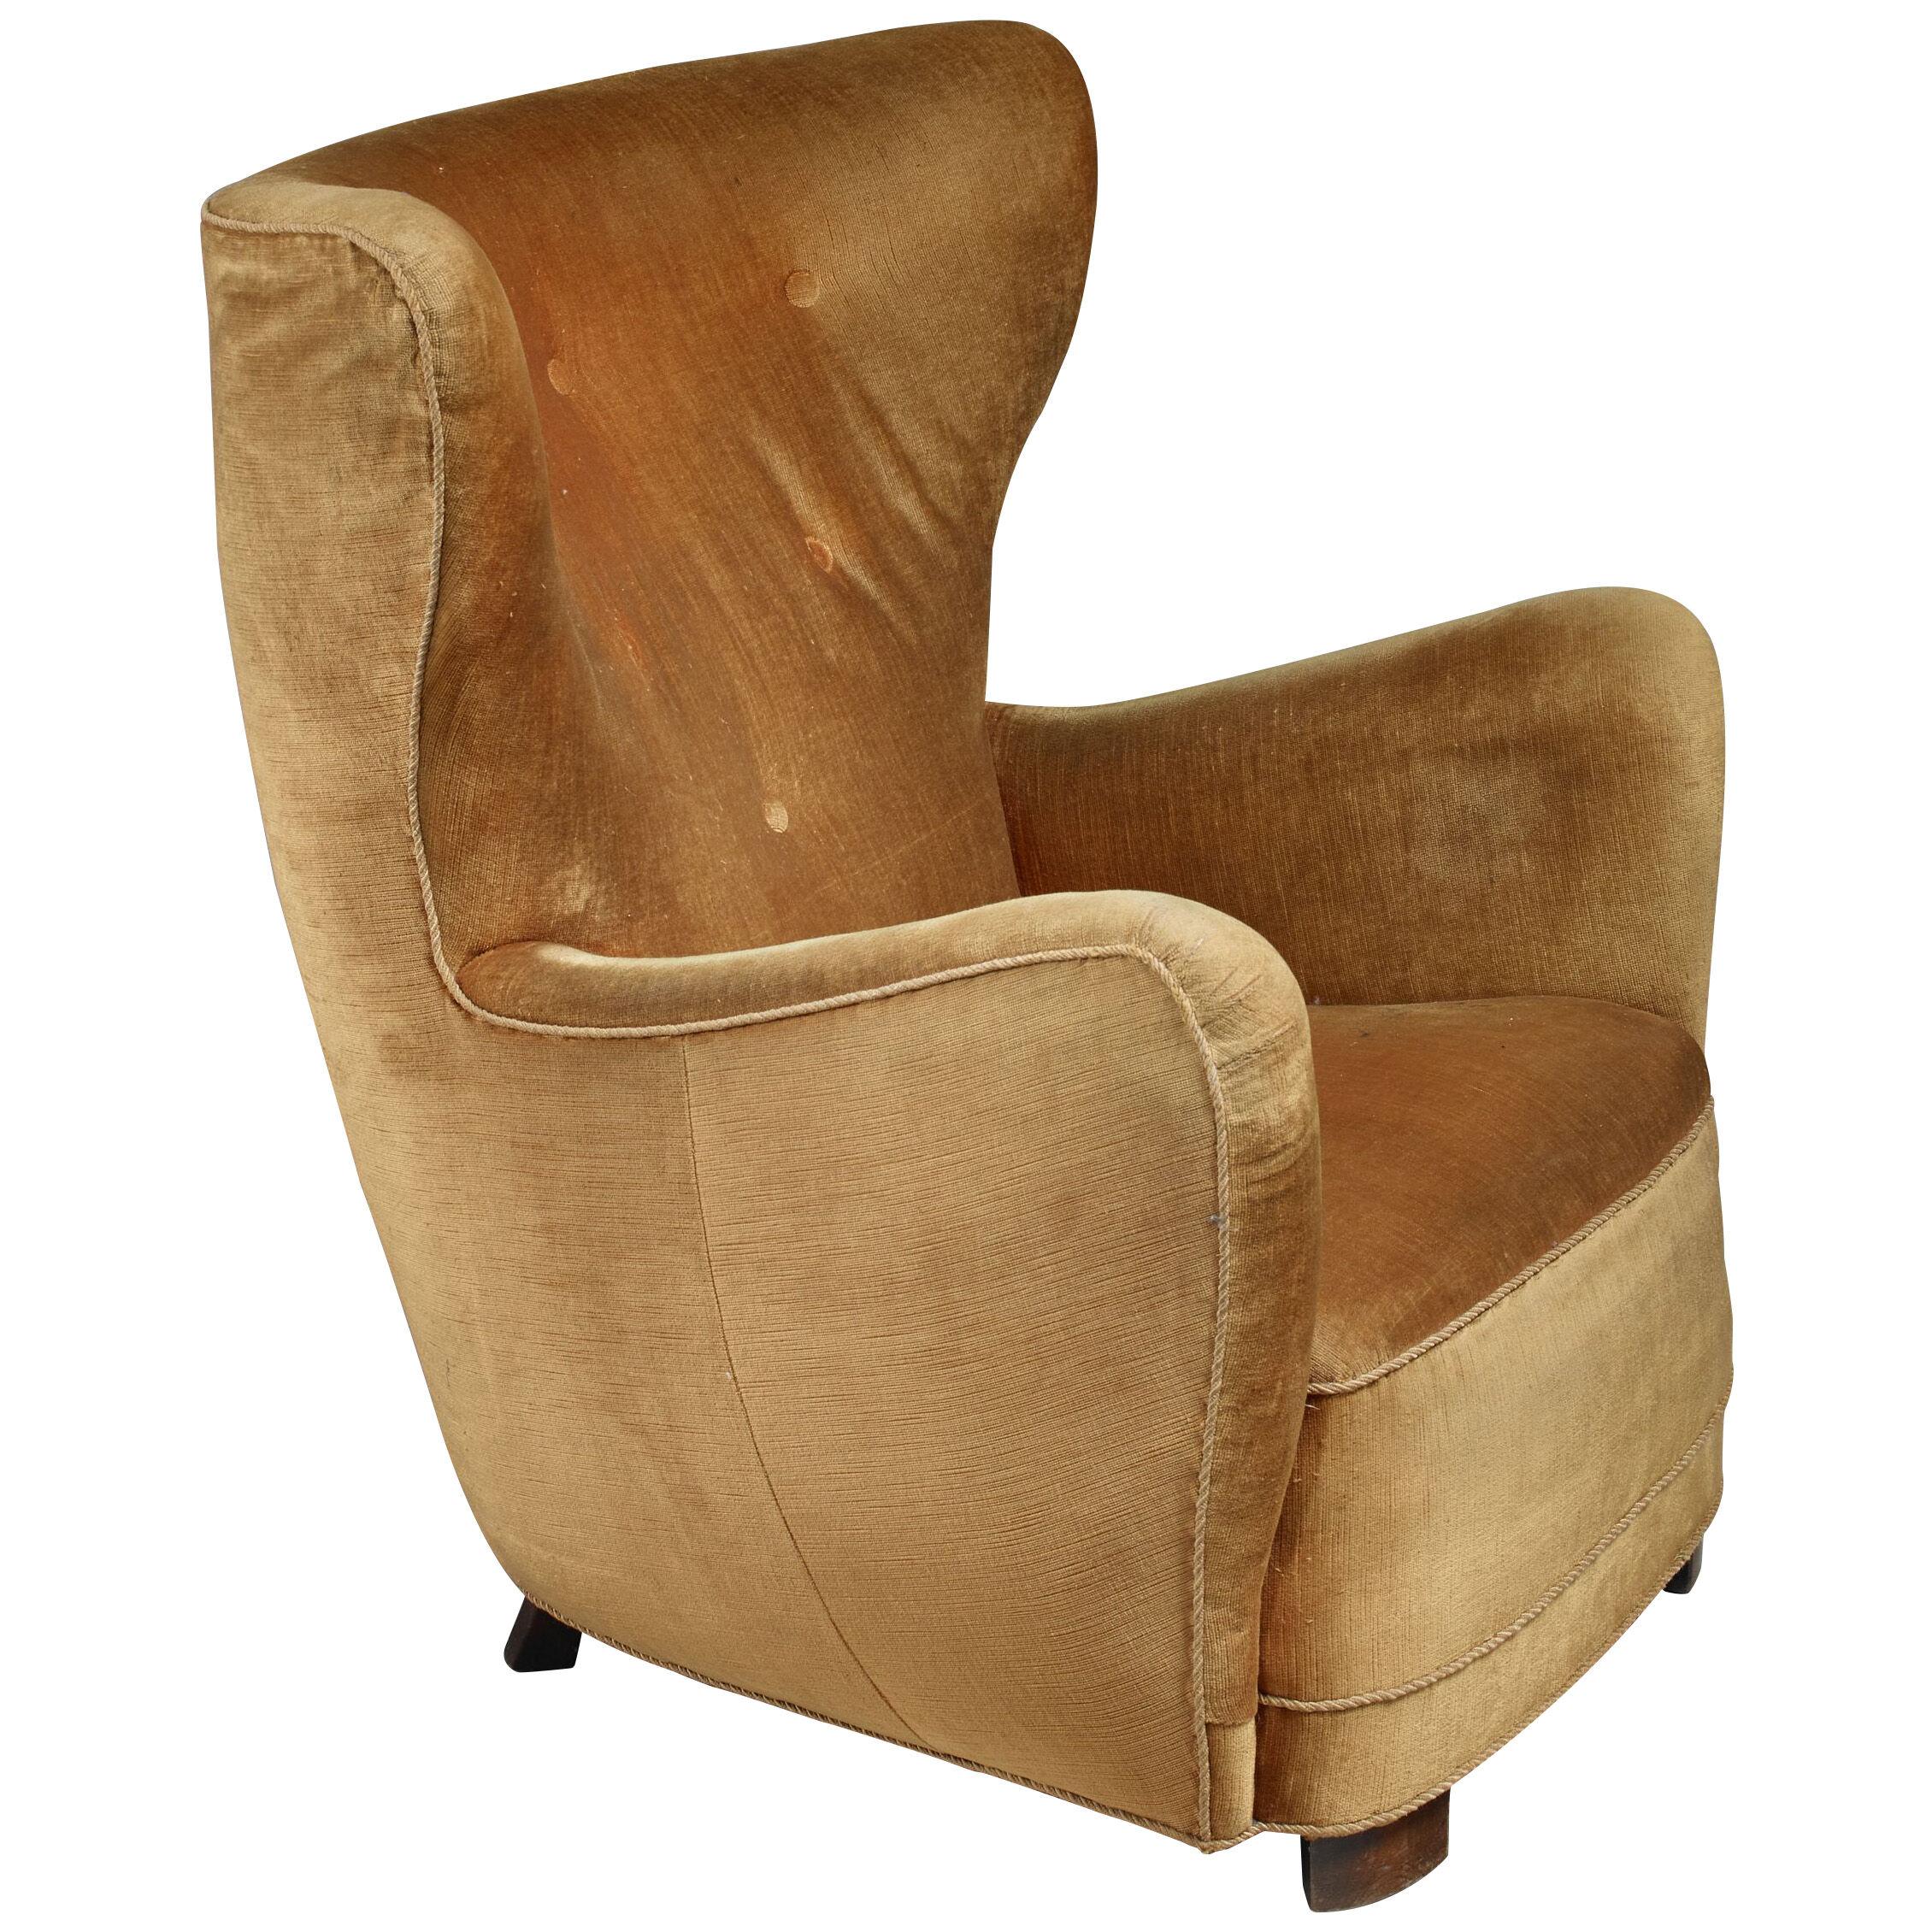 Mogens Lassen 'Style' Lounge Chair with Velour Upholstery, Denmark, 1940s